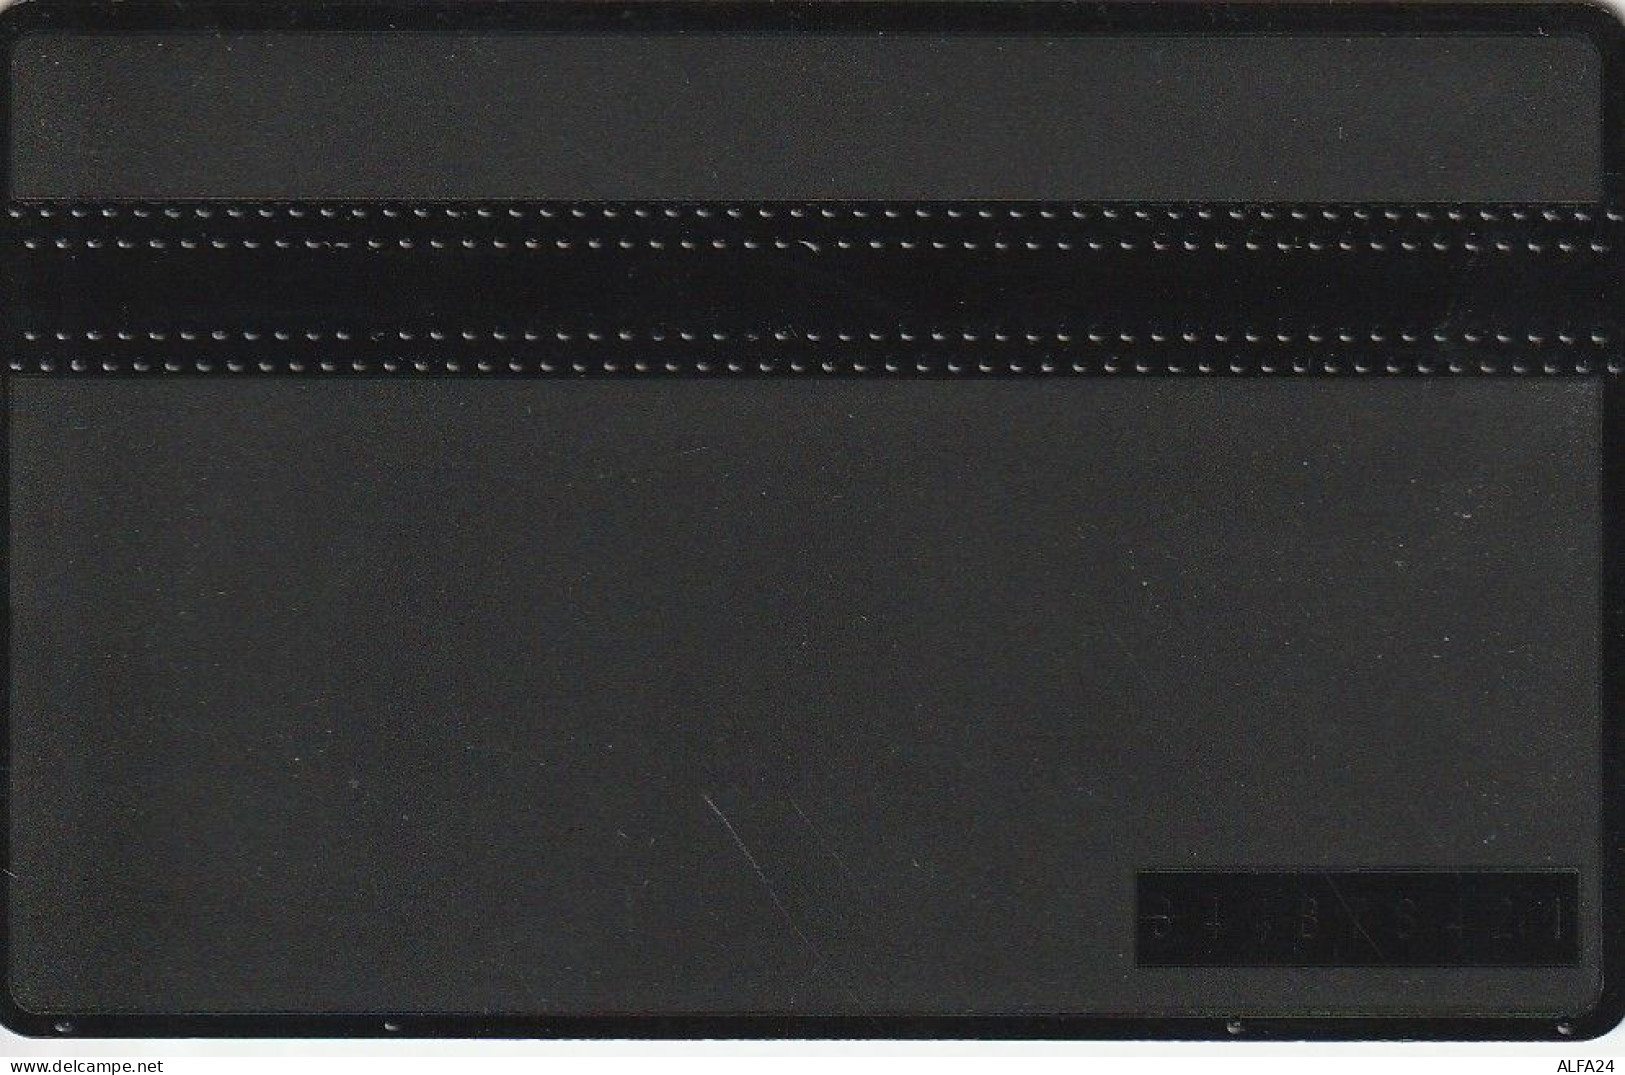 PHONE CARD BELGIO LG (CV6659 - Senza Chip